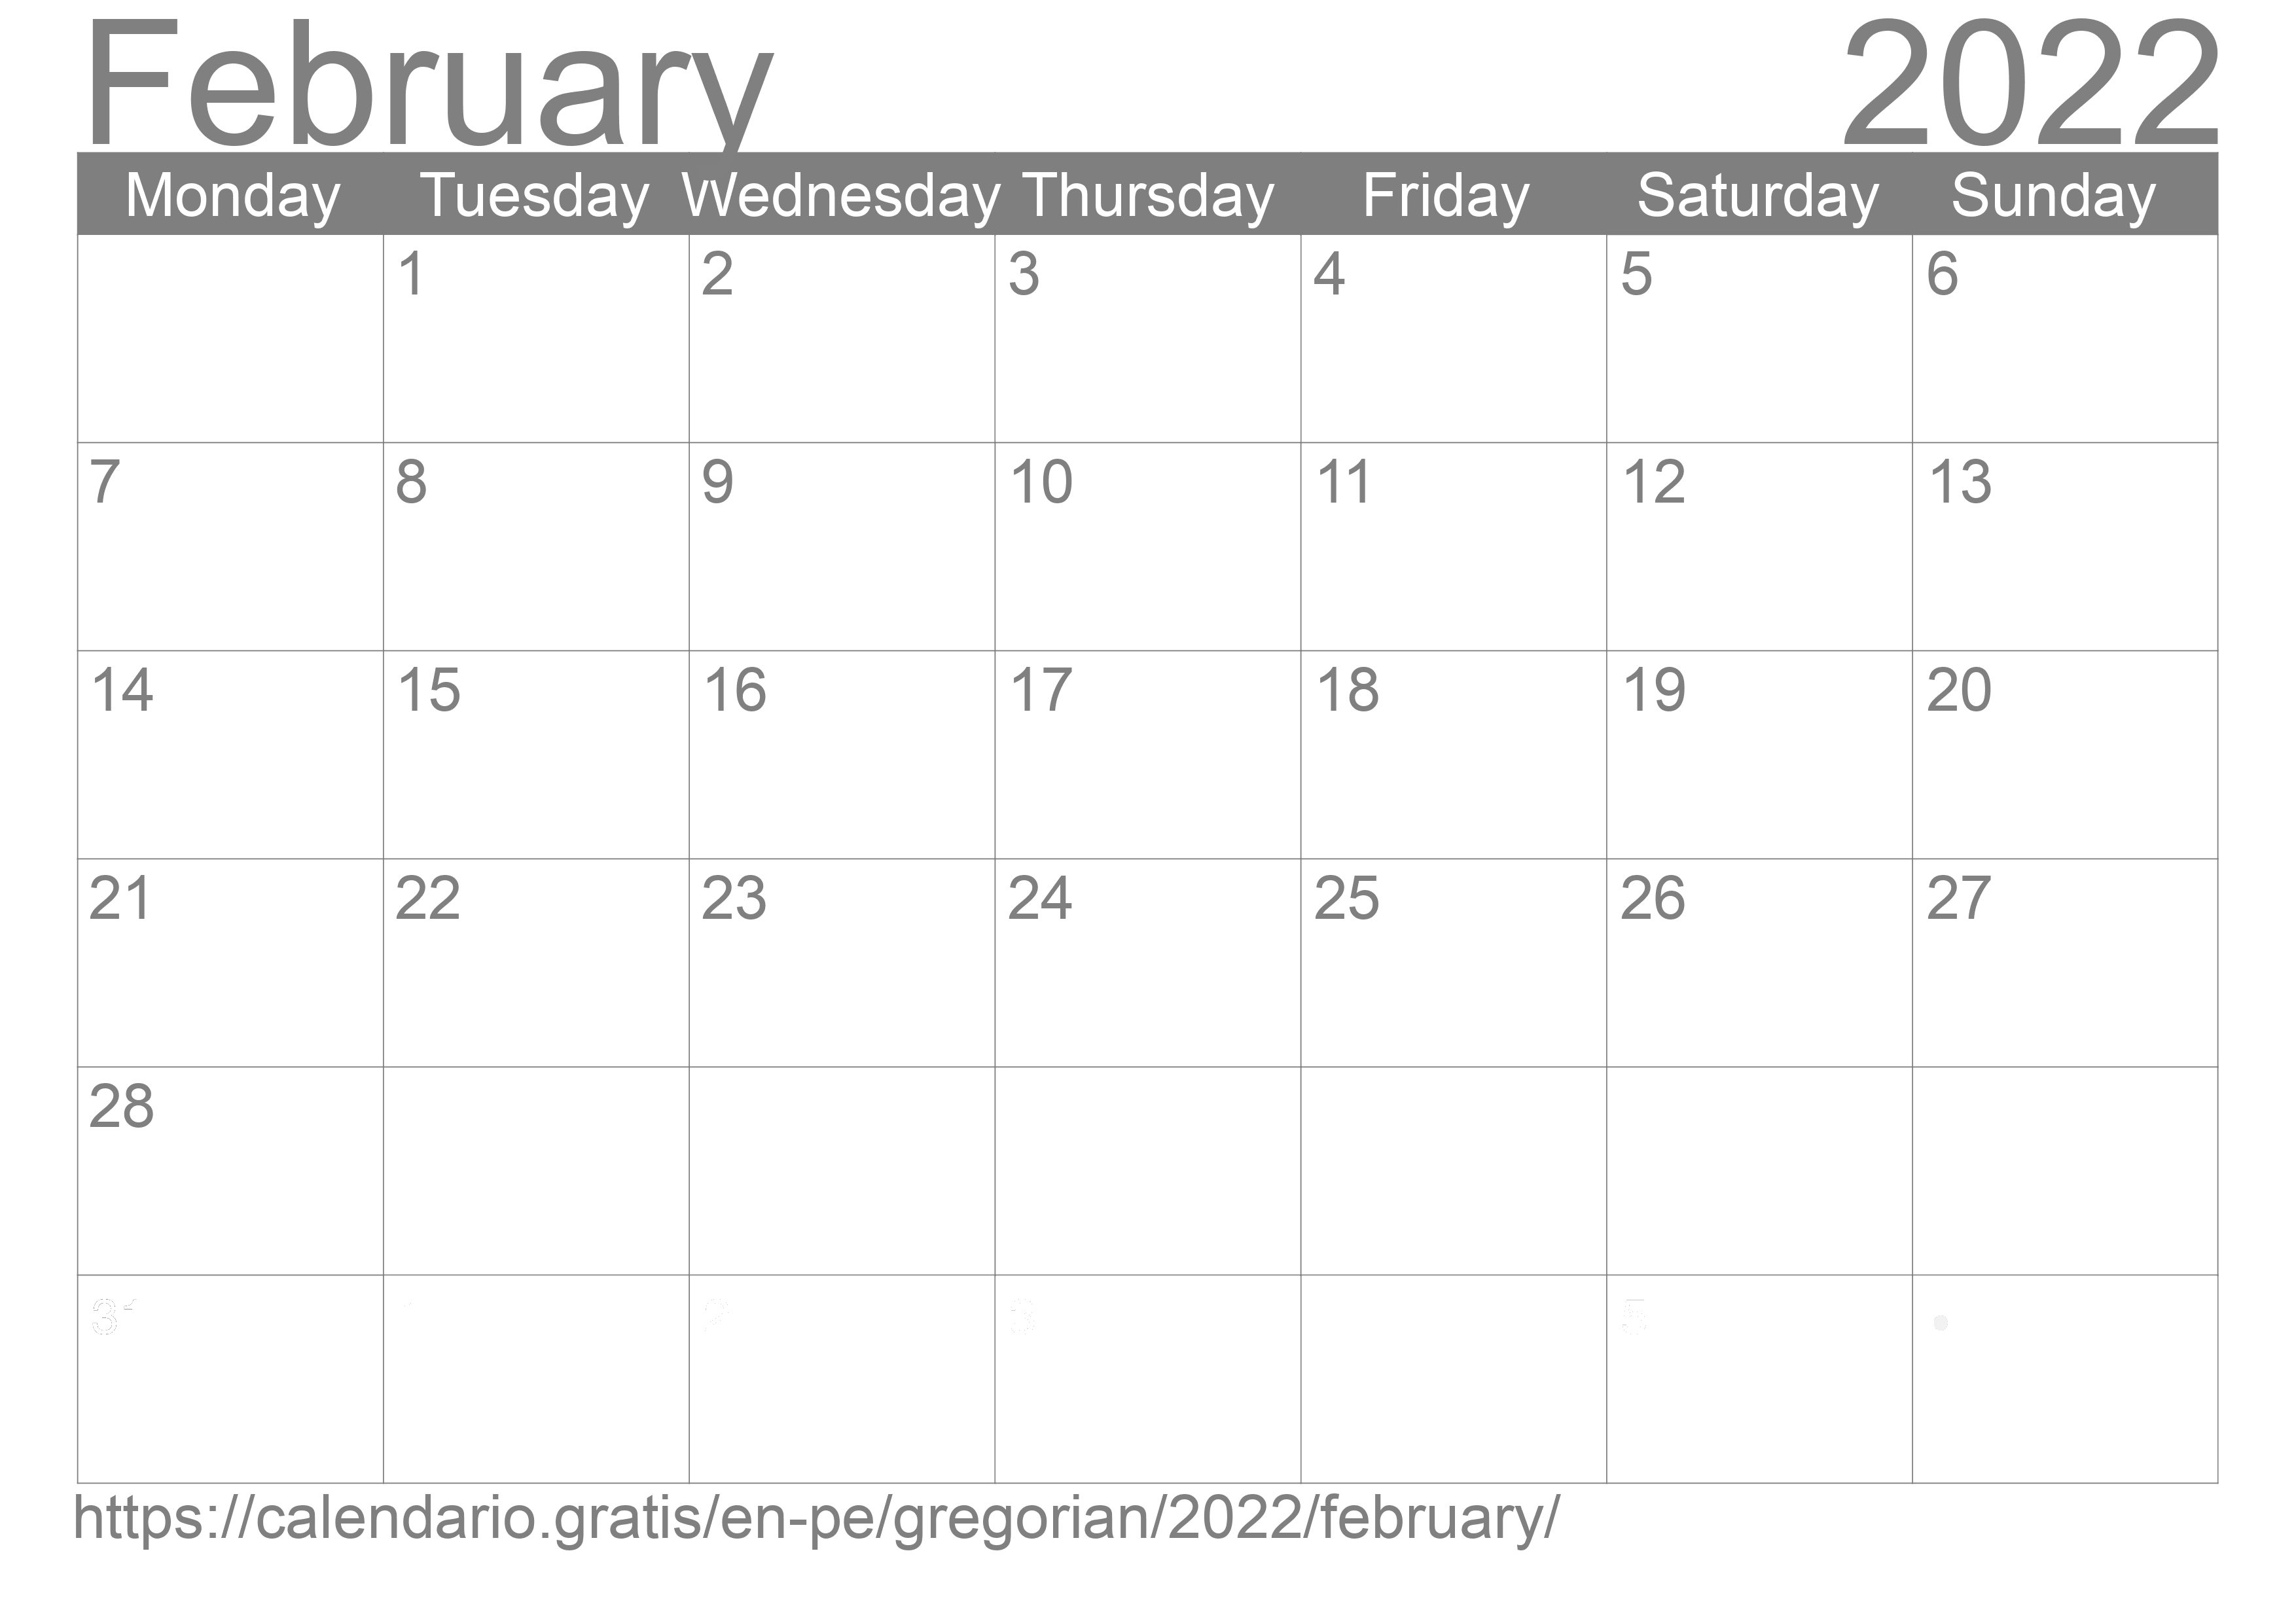 Calendar February 2022 to print